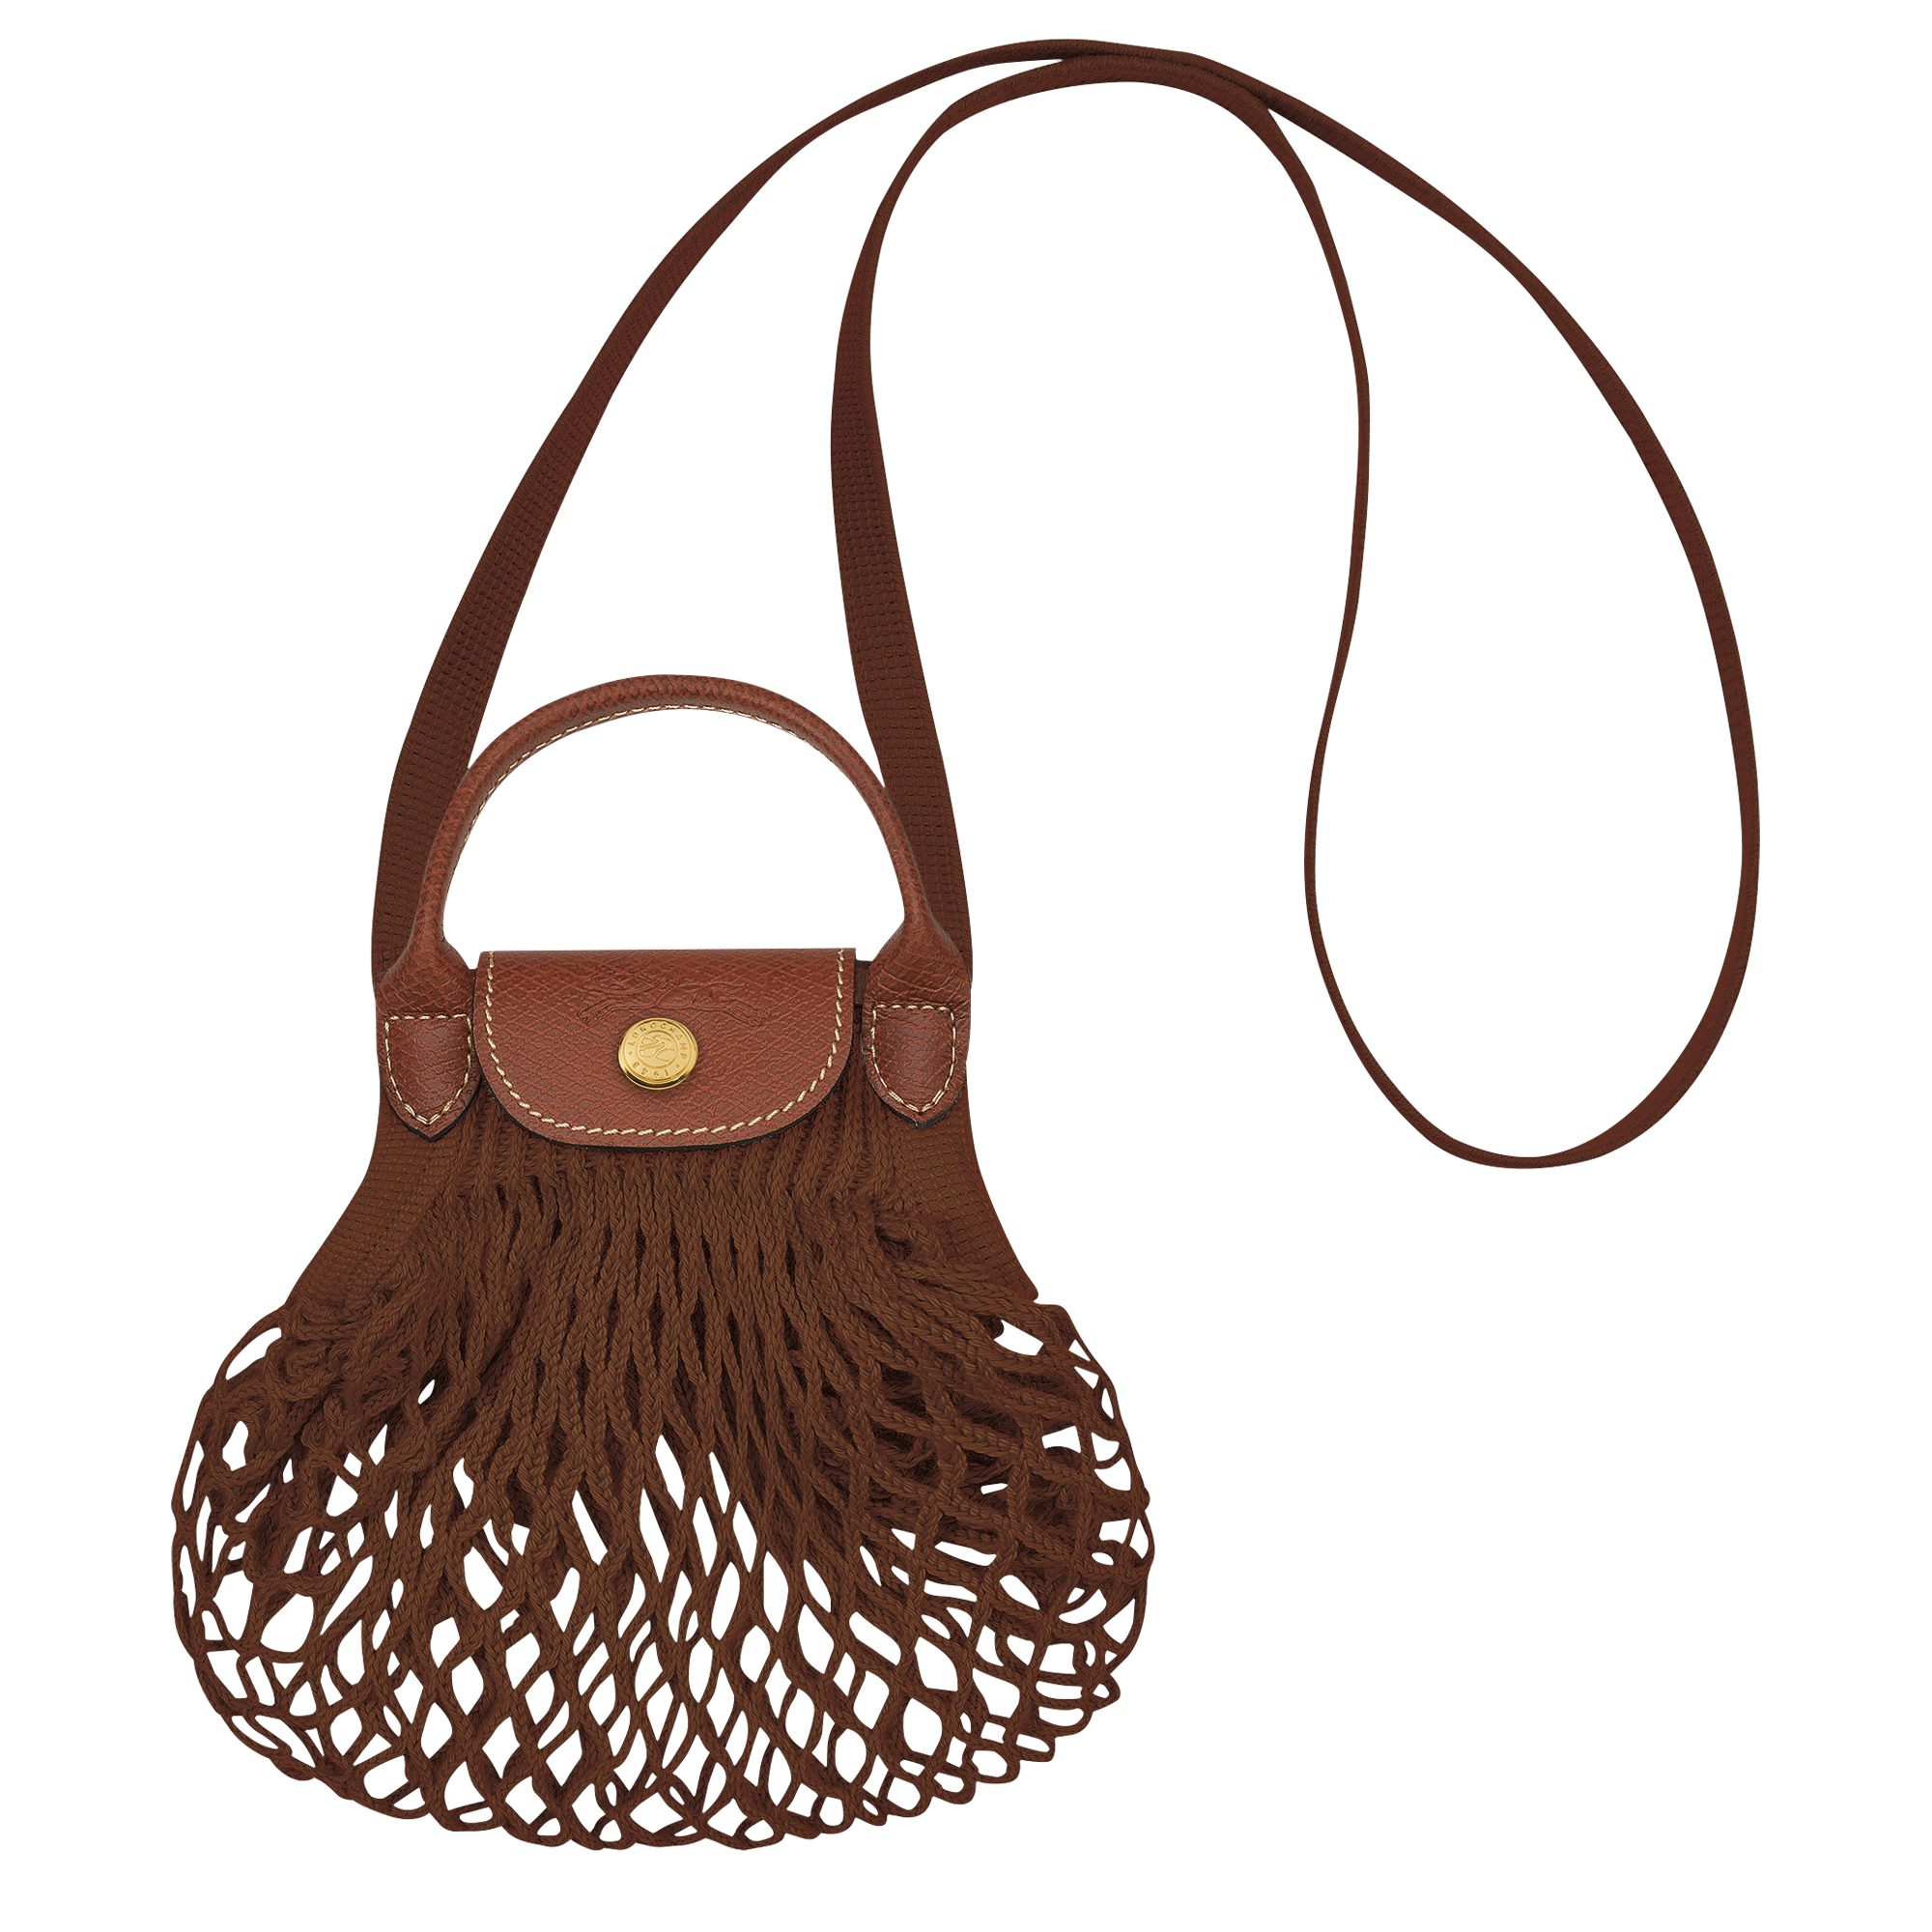 Le Pliage Xtra XS Crossbody bag Ecru - Leather (10188987037)